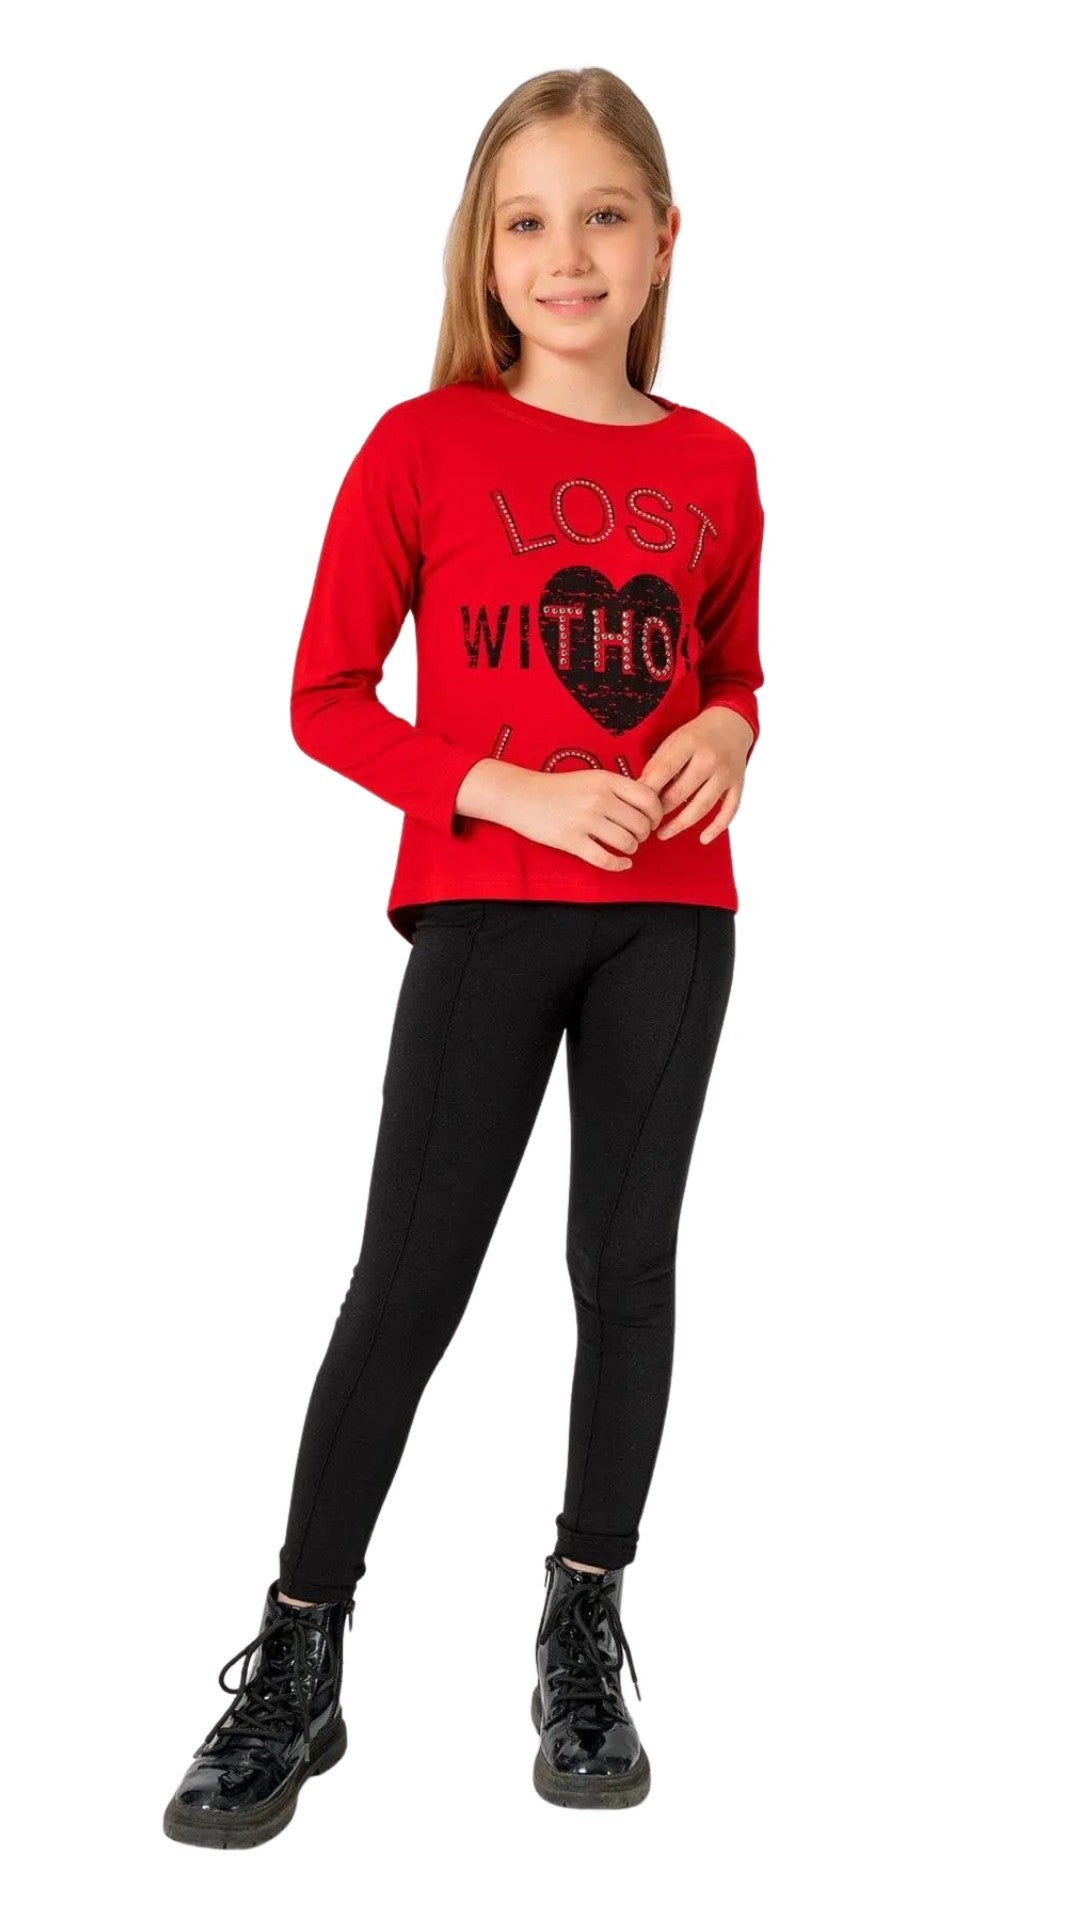 InCity Girls Tween 7-14 Years Regular Fit Red Casual Long Sleeve Comfy Lost T-shirt InCity Boys & Girls